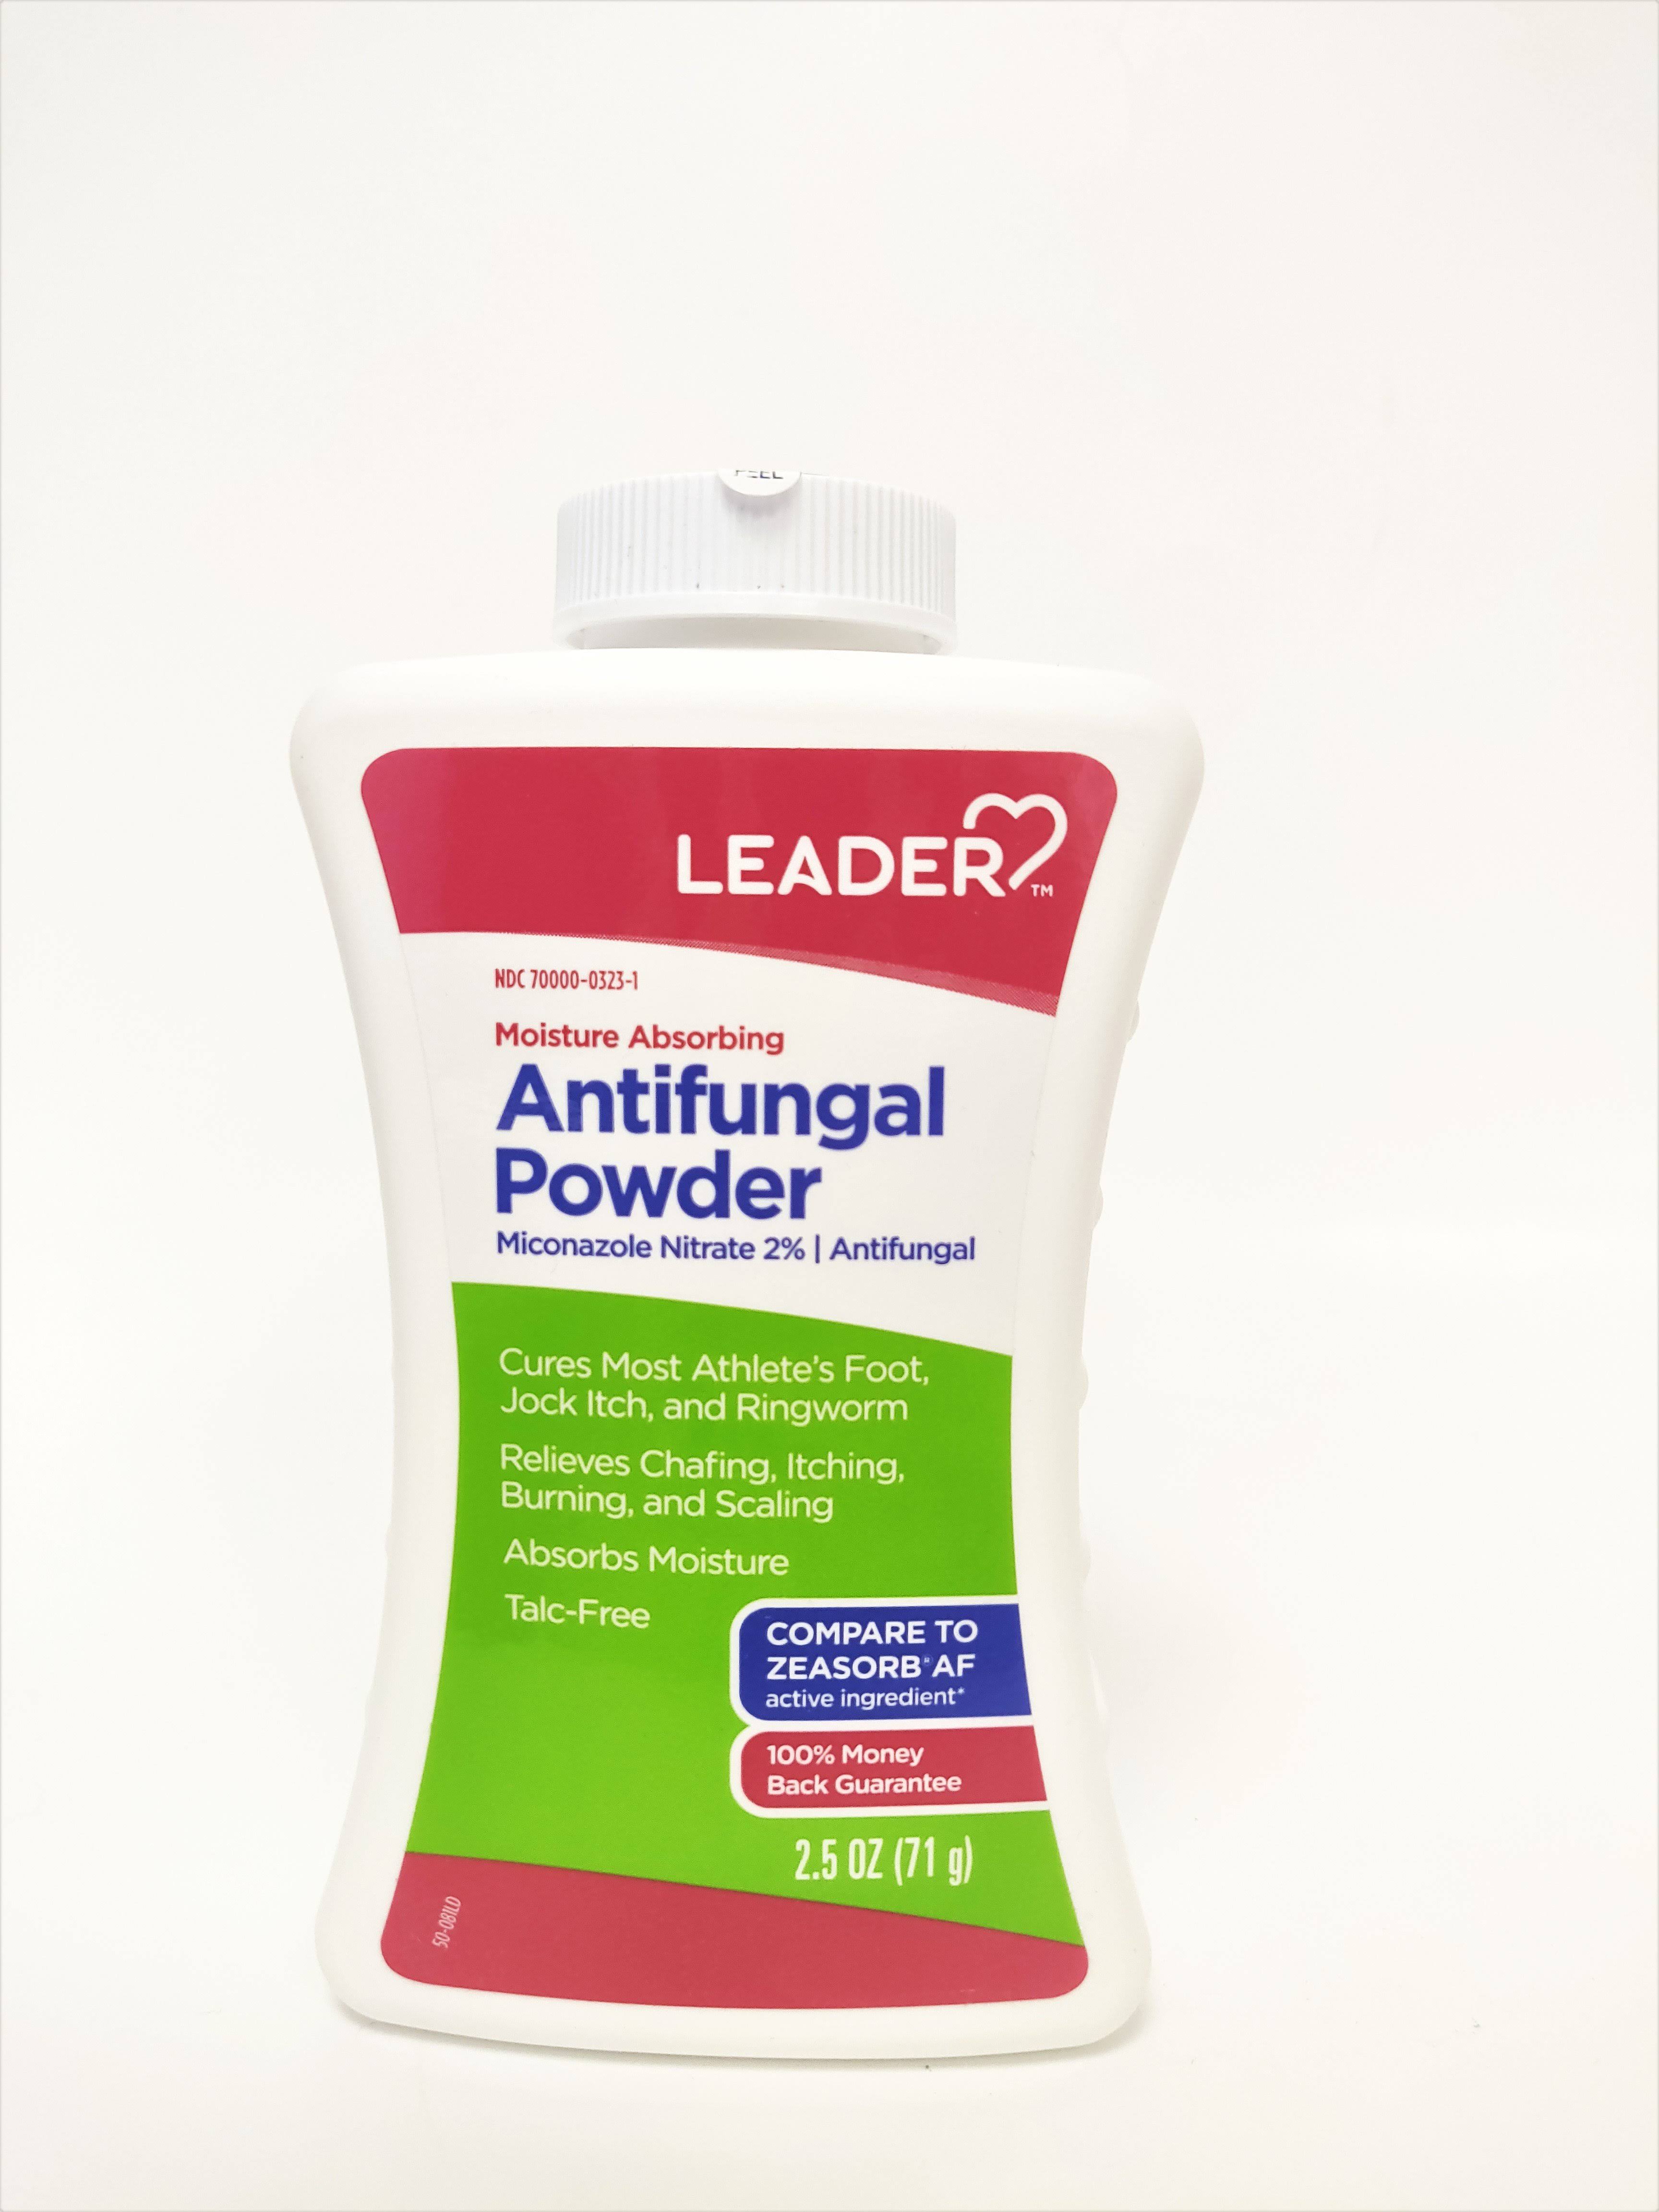 Leader Antifungal Powder Moisture Absorbing 2.5 oz